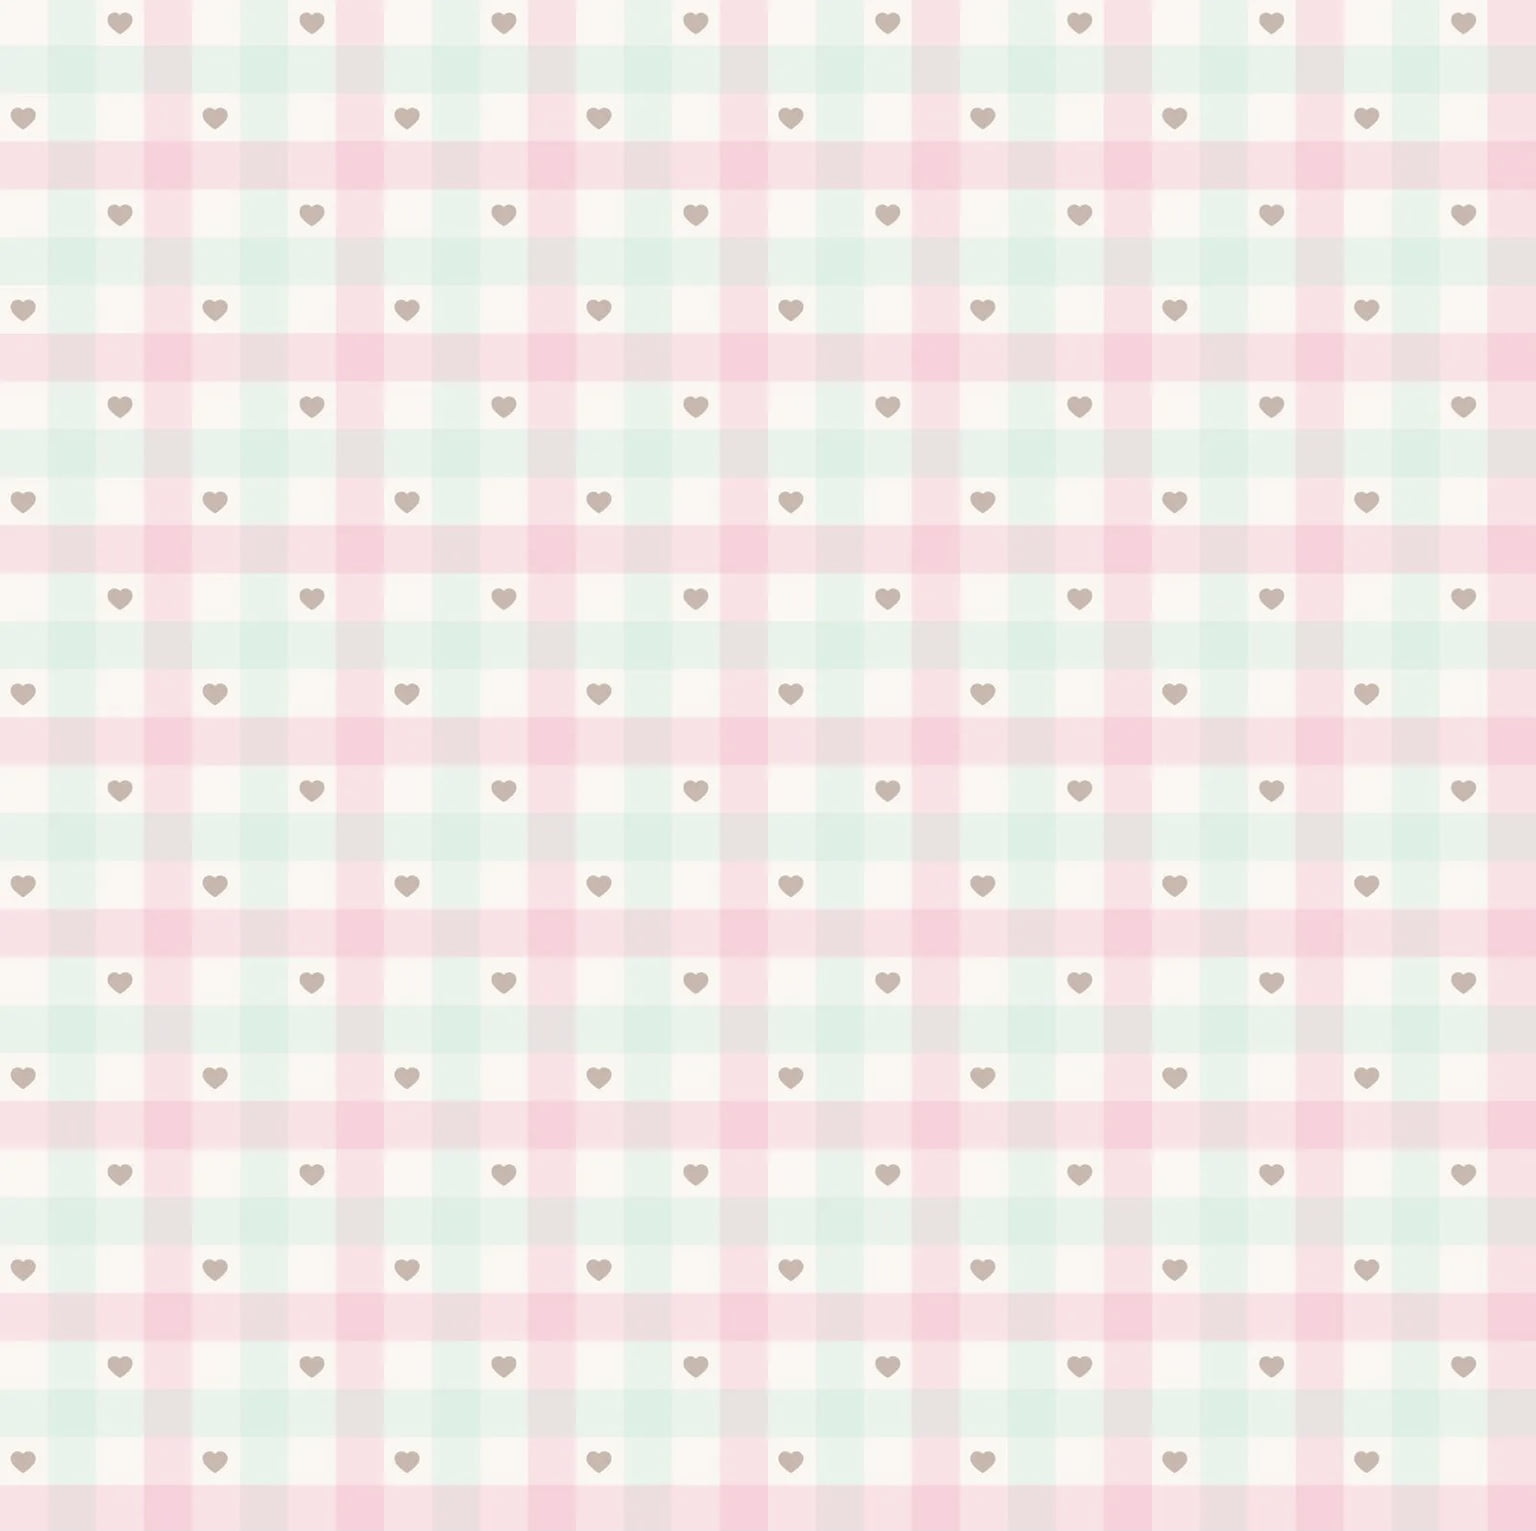 Tricoline estampa digital xadrez tons de rosa - Renatta Tecidos